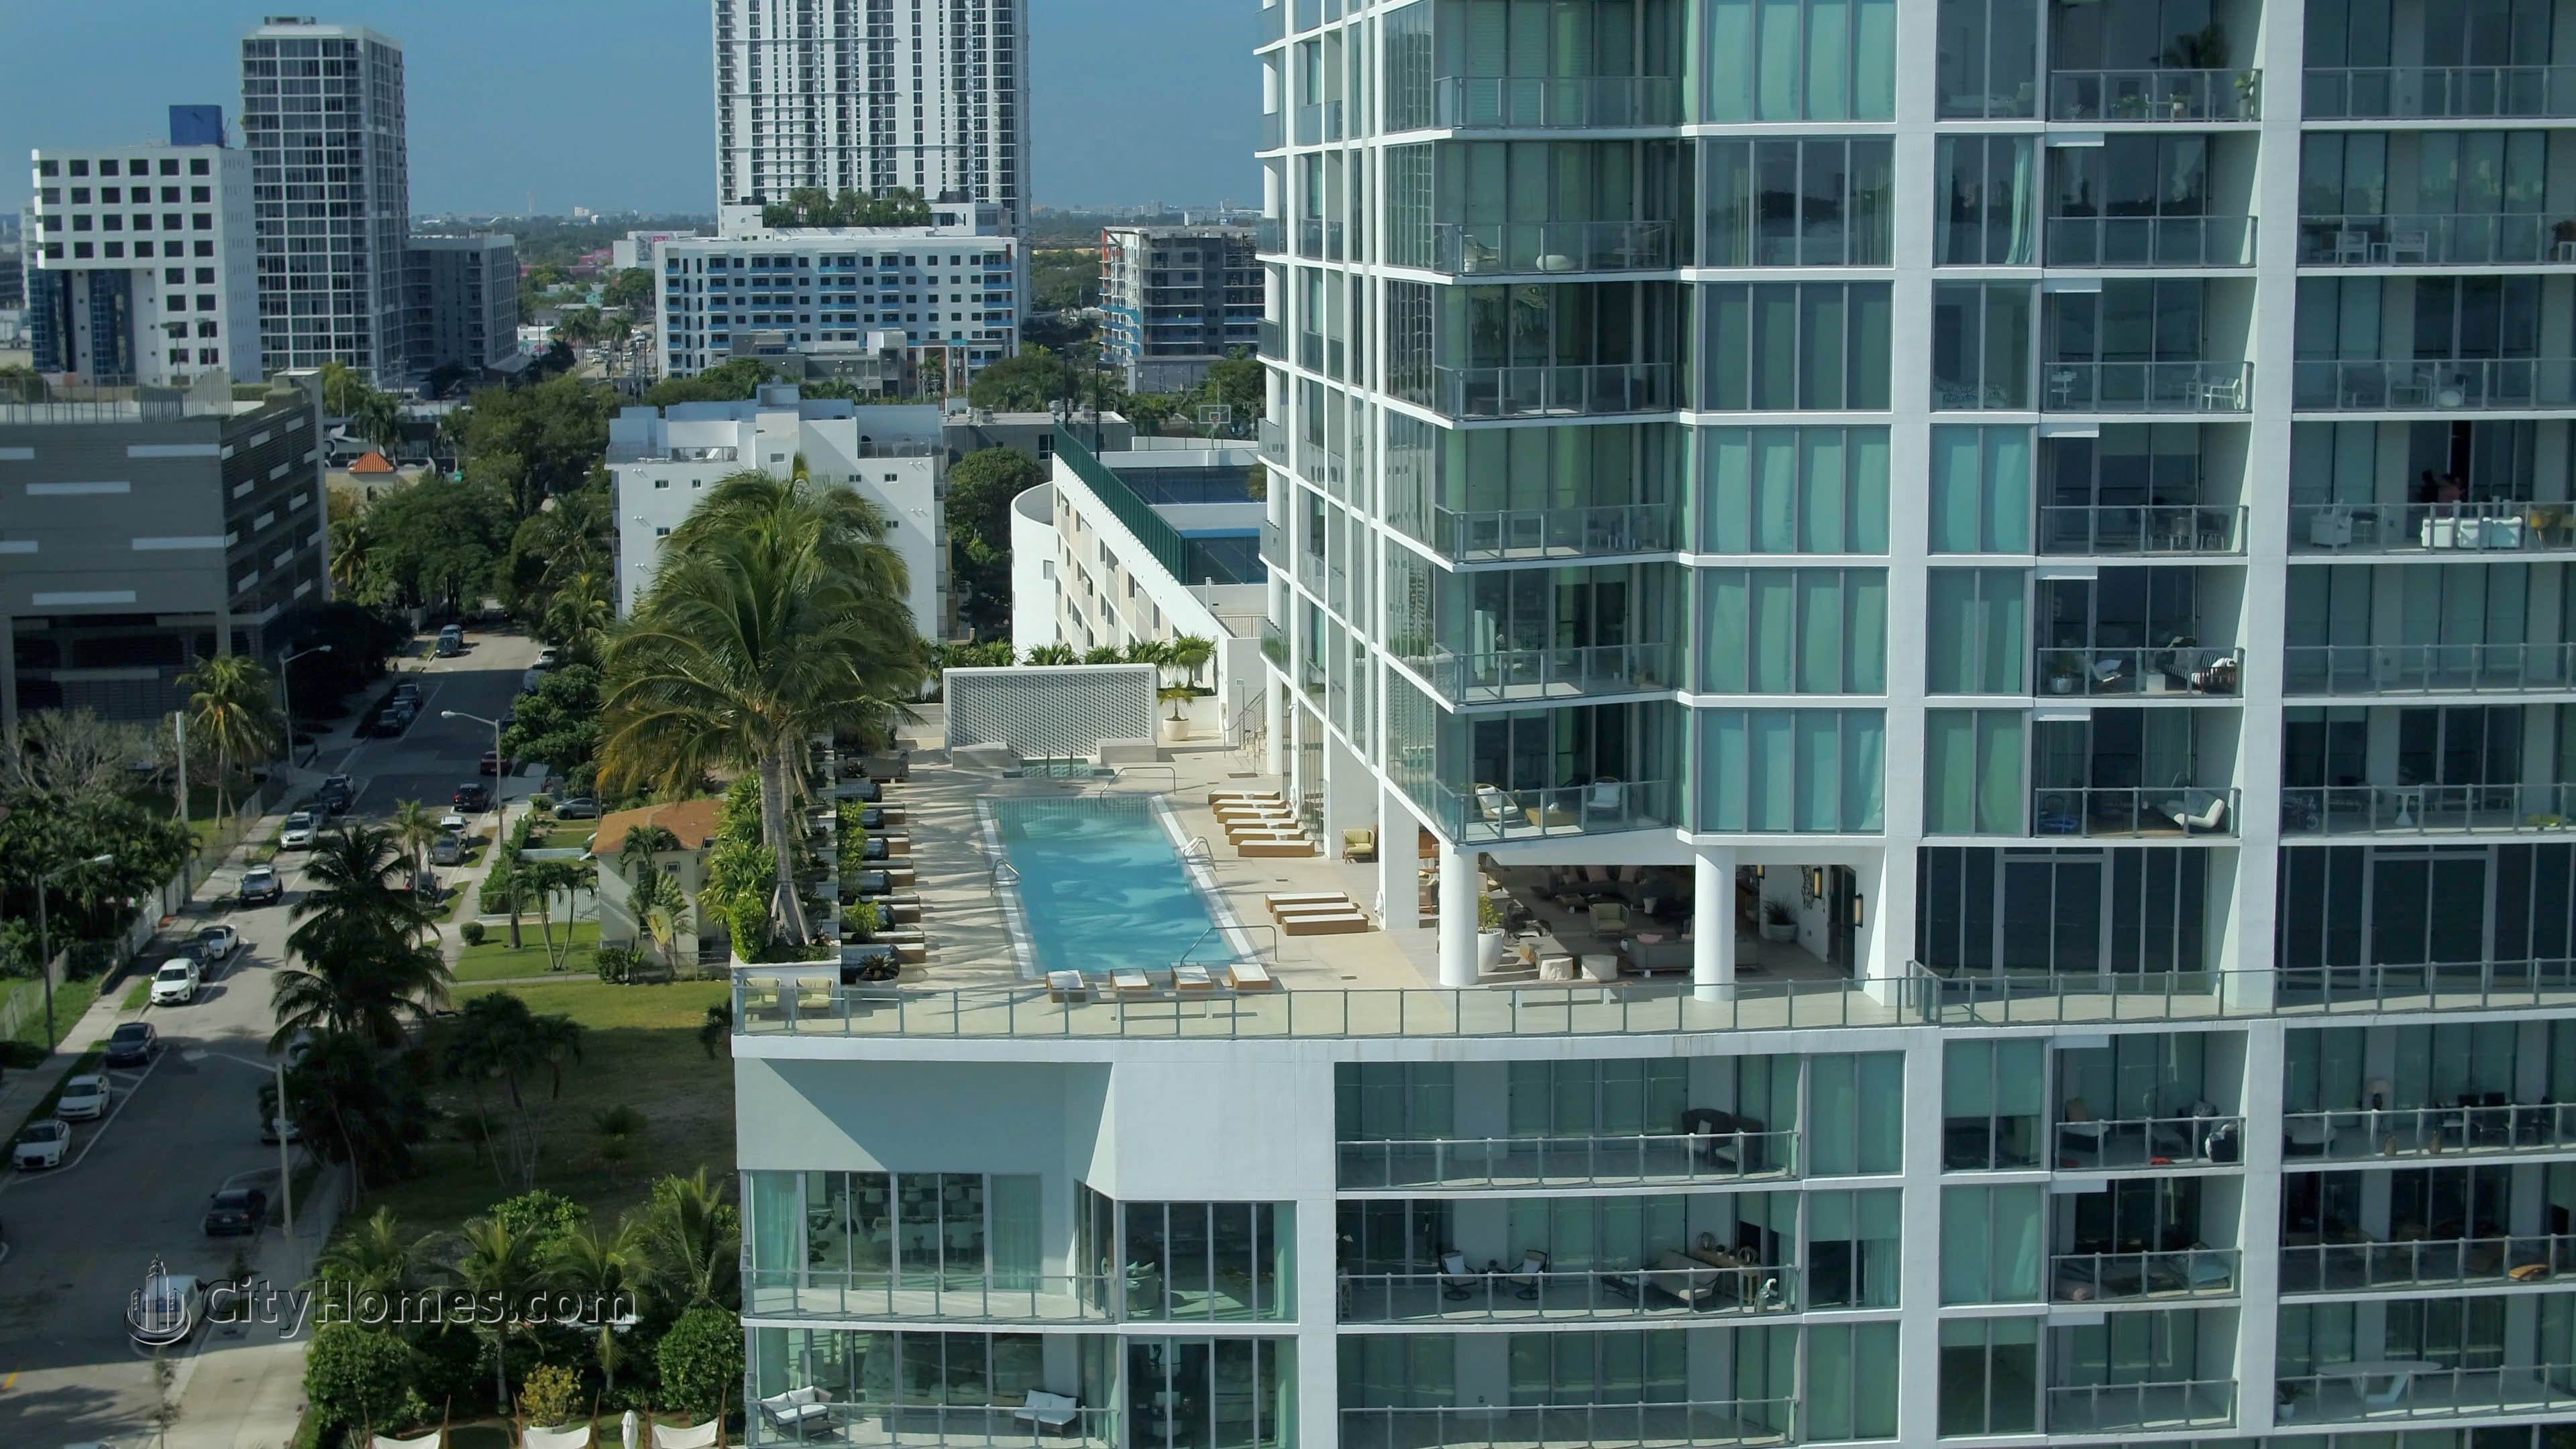 4. Biscayne Beach building at 2900 NE 7th Avenue, Edgewater, Miami, FL 33137